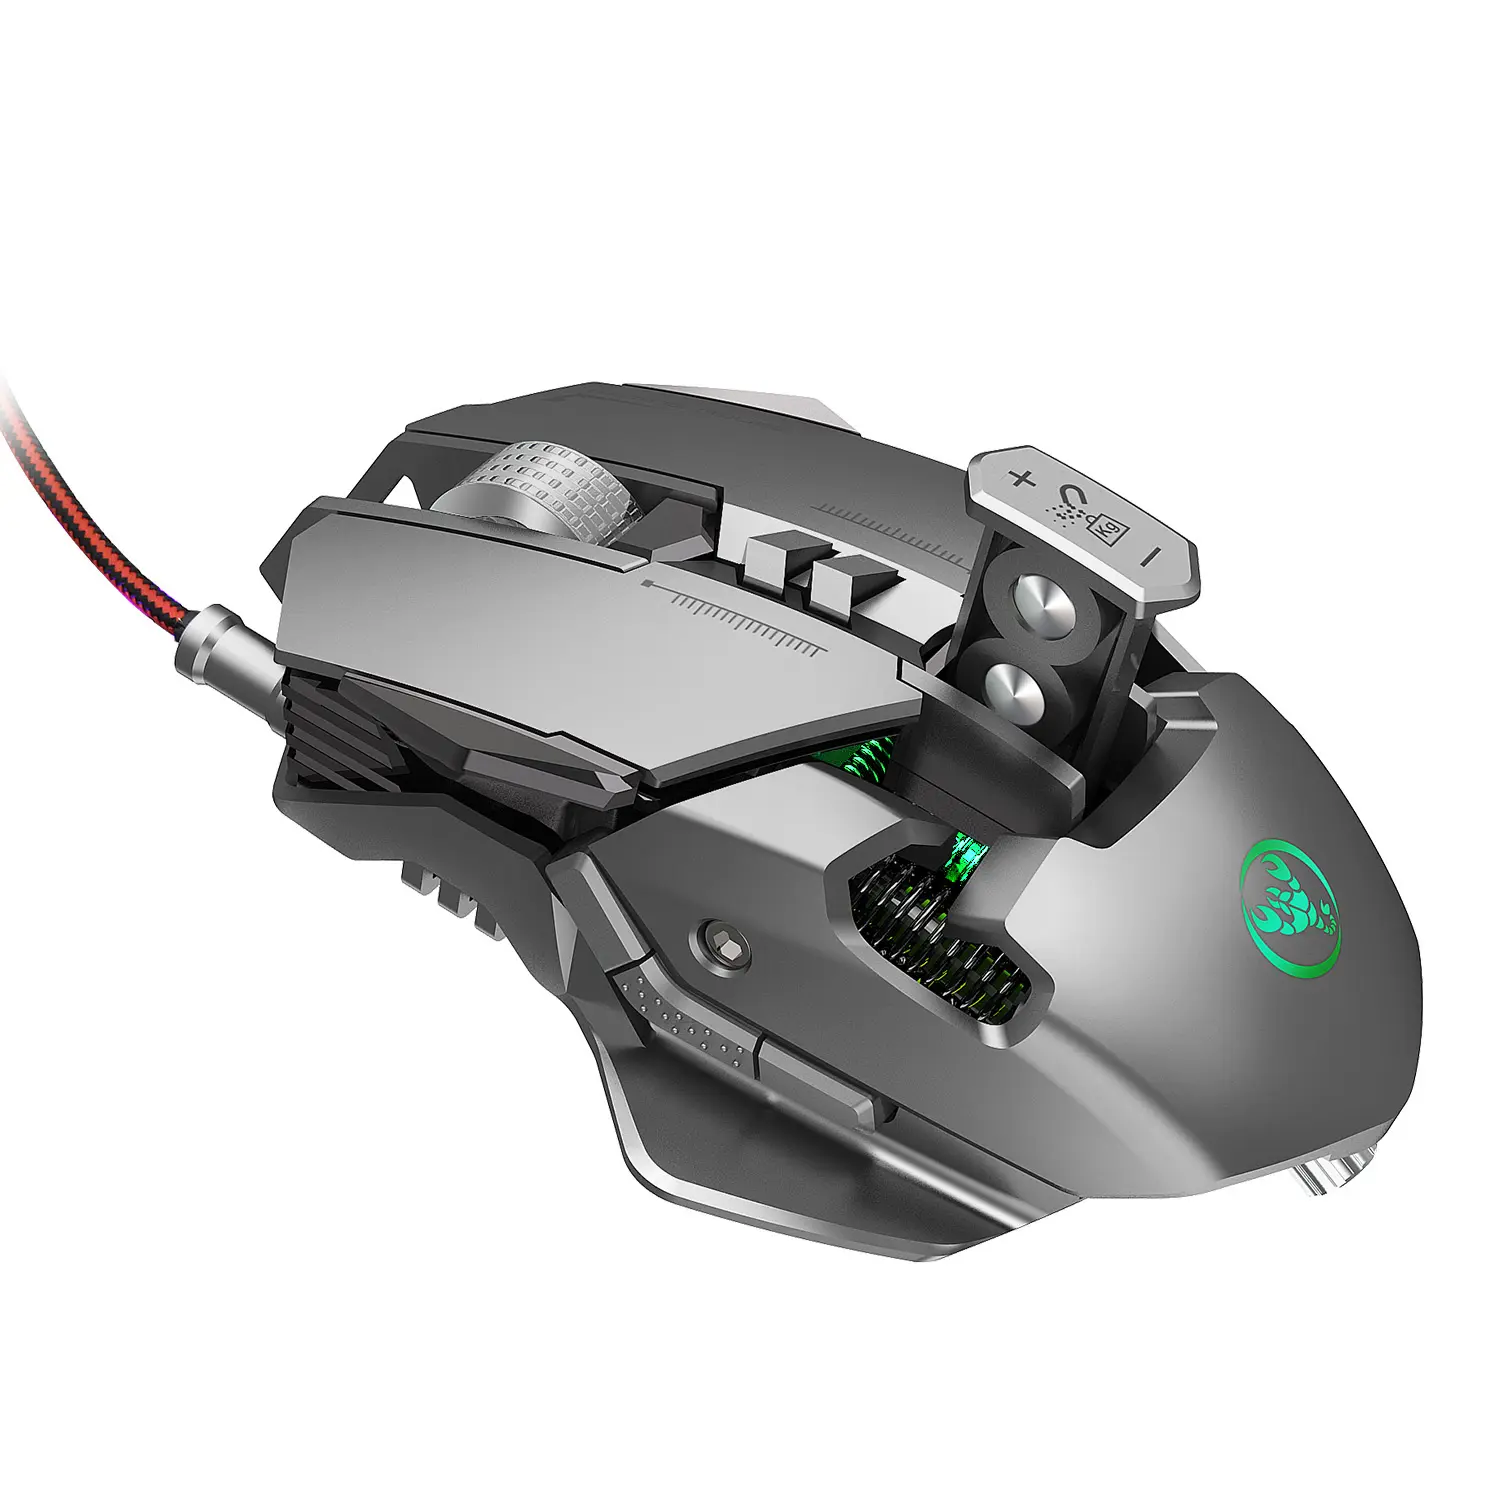 Ancreu J800 Mouse Gaming 7 Kunci Penuh, Mouse Pemrograman Makro Dapat Disesuaikan, Ancreu HXSJ Merek 100%, Mouse Gaming Baru